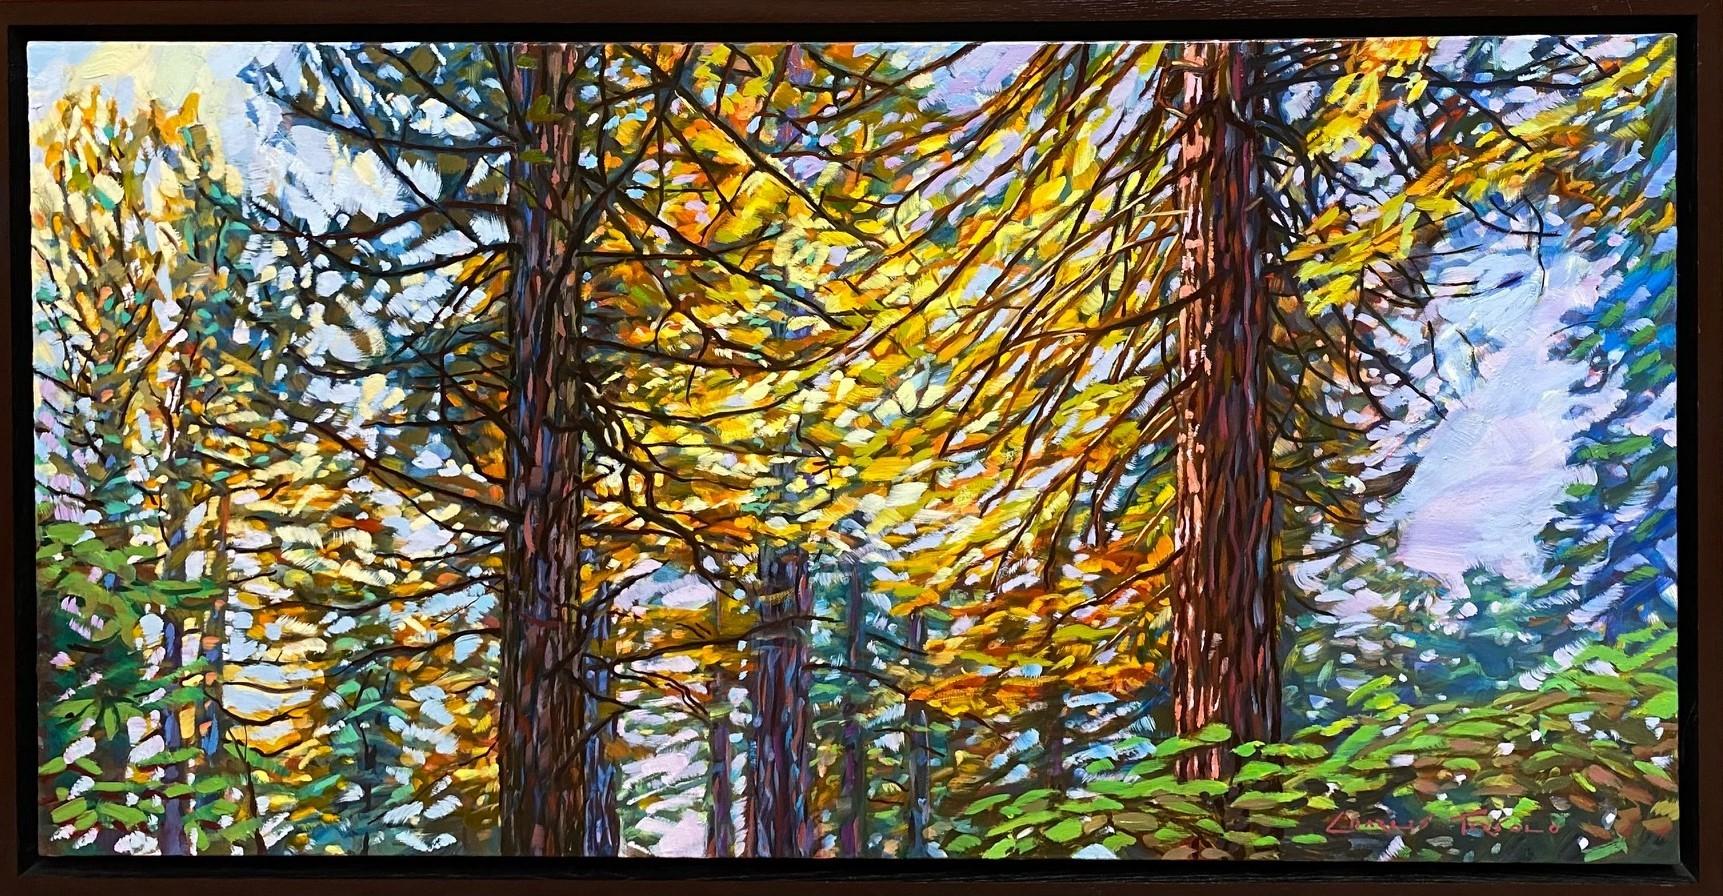 Landscape Painting Charles Tersolo - Paysage expressionniste original de 24x48 Muir Woods, Californie